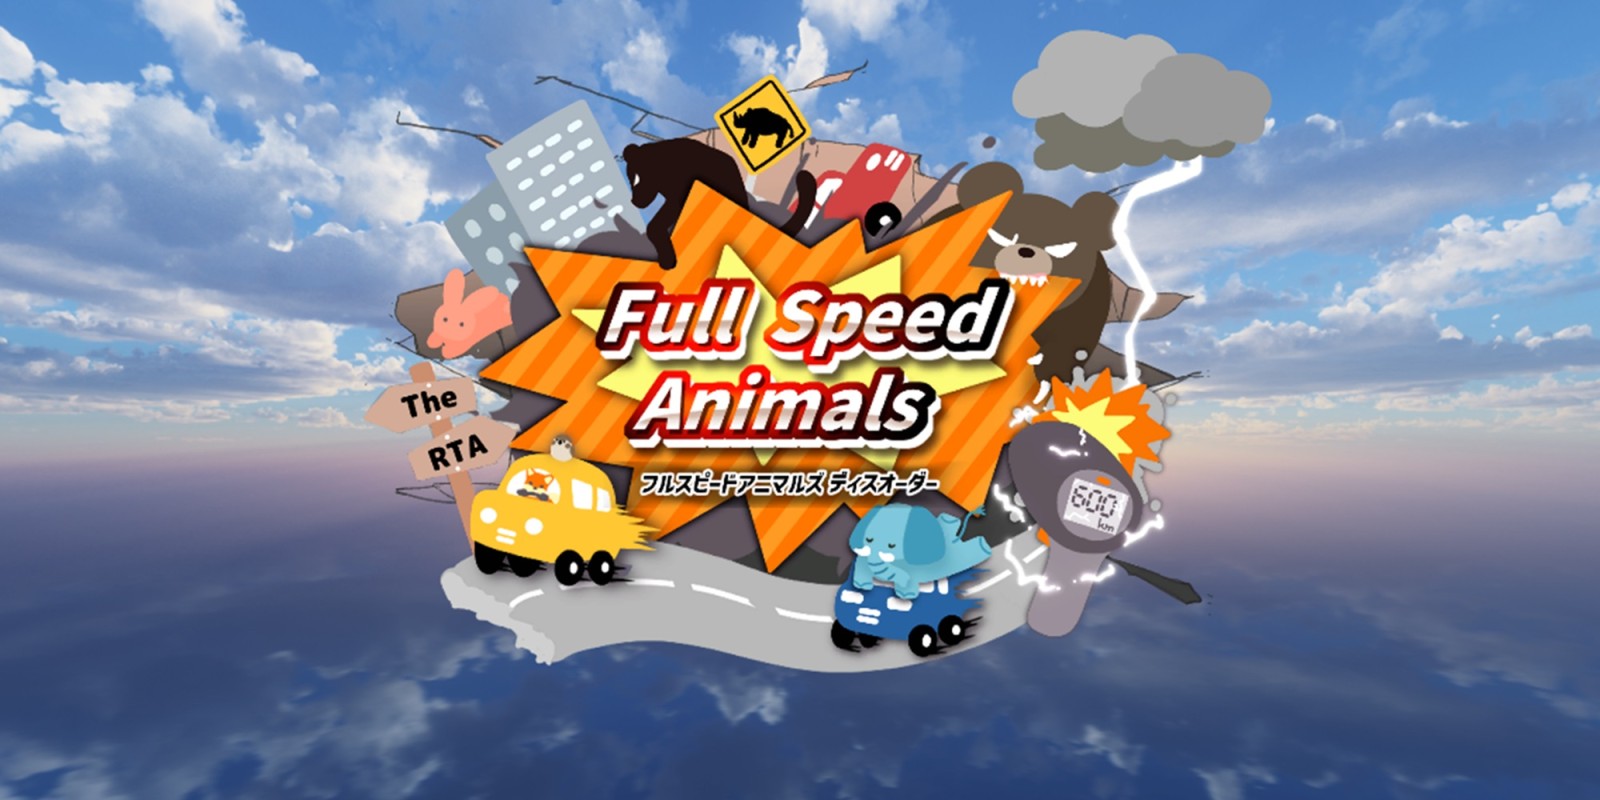 Full Speed Animals - The RTA